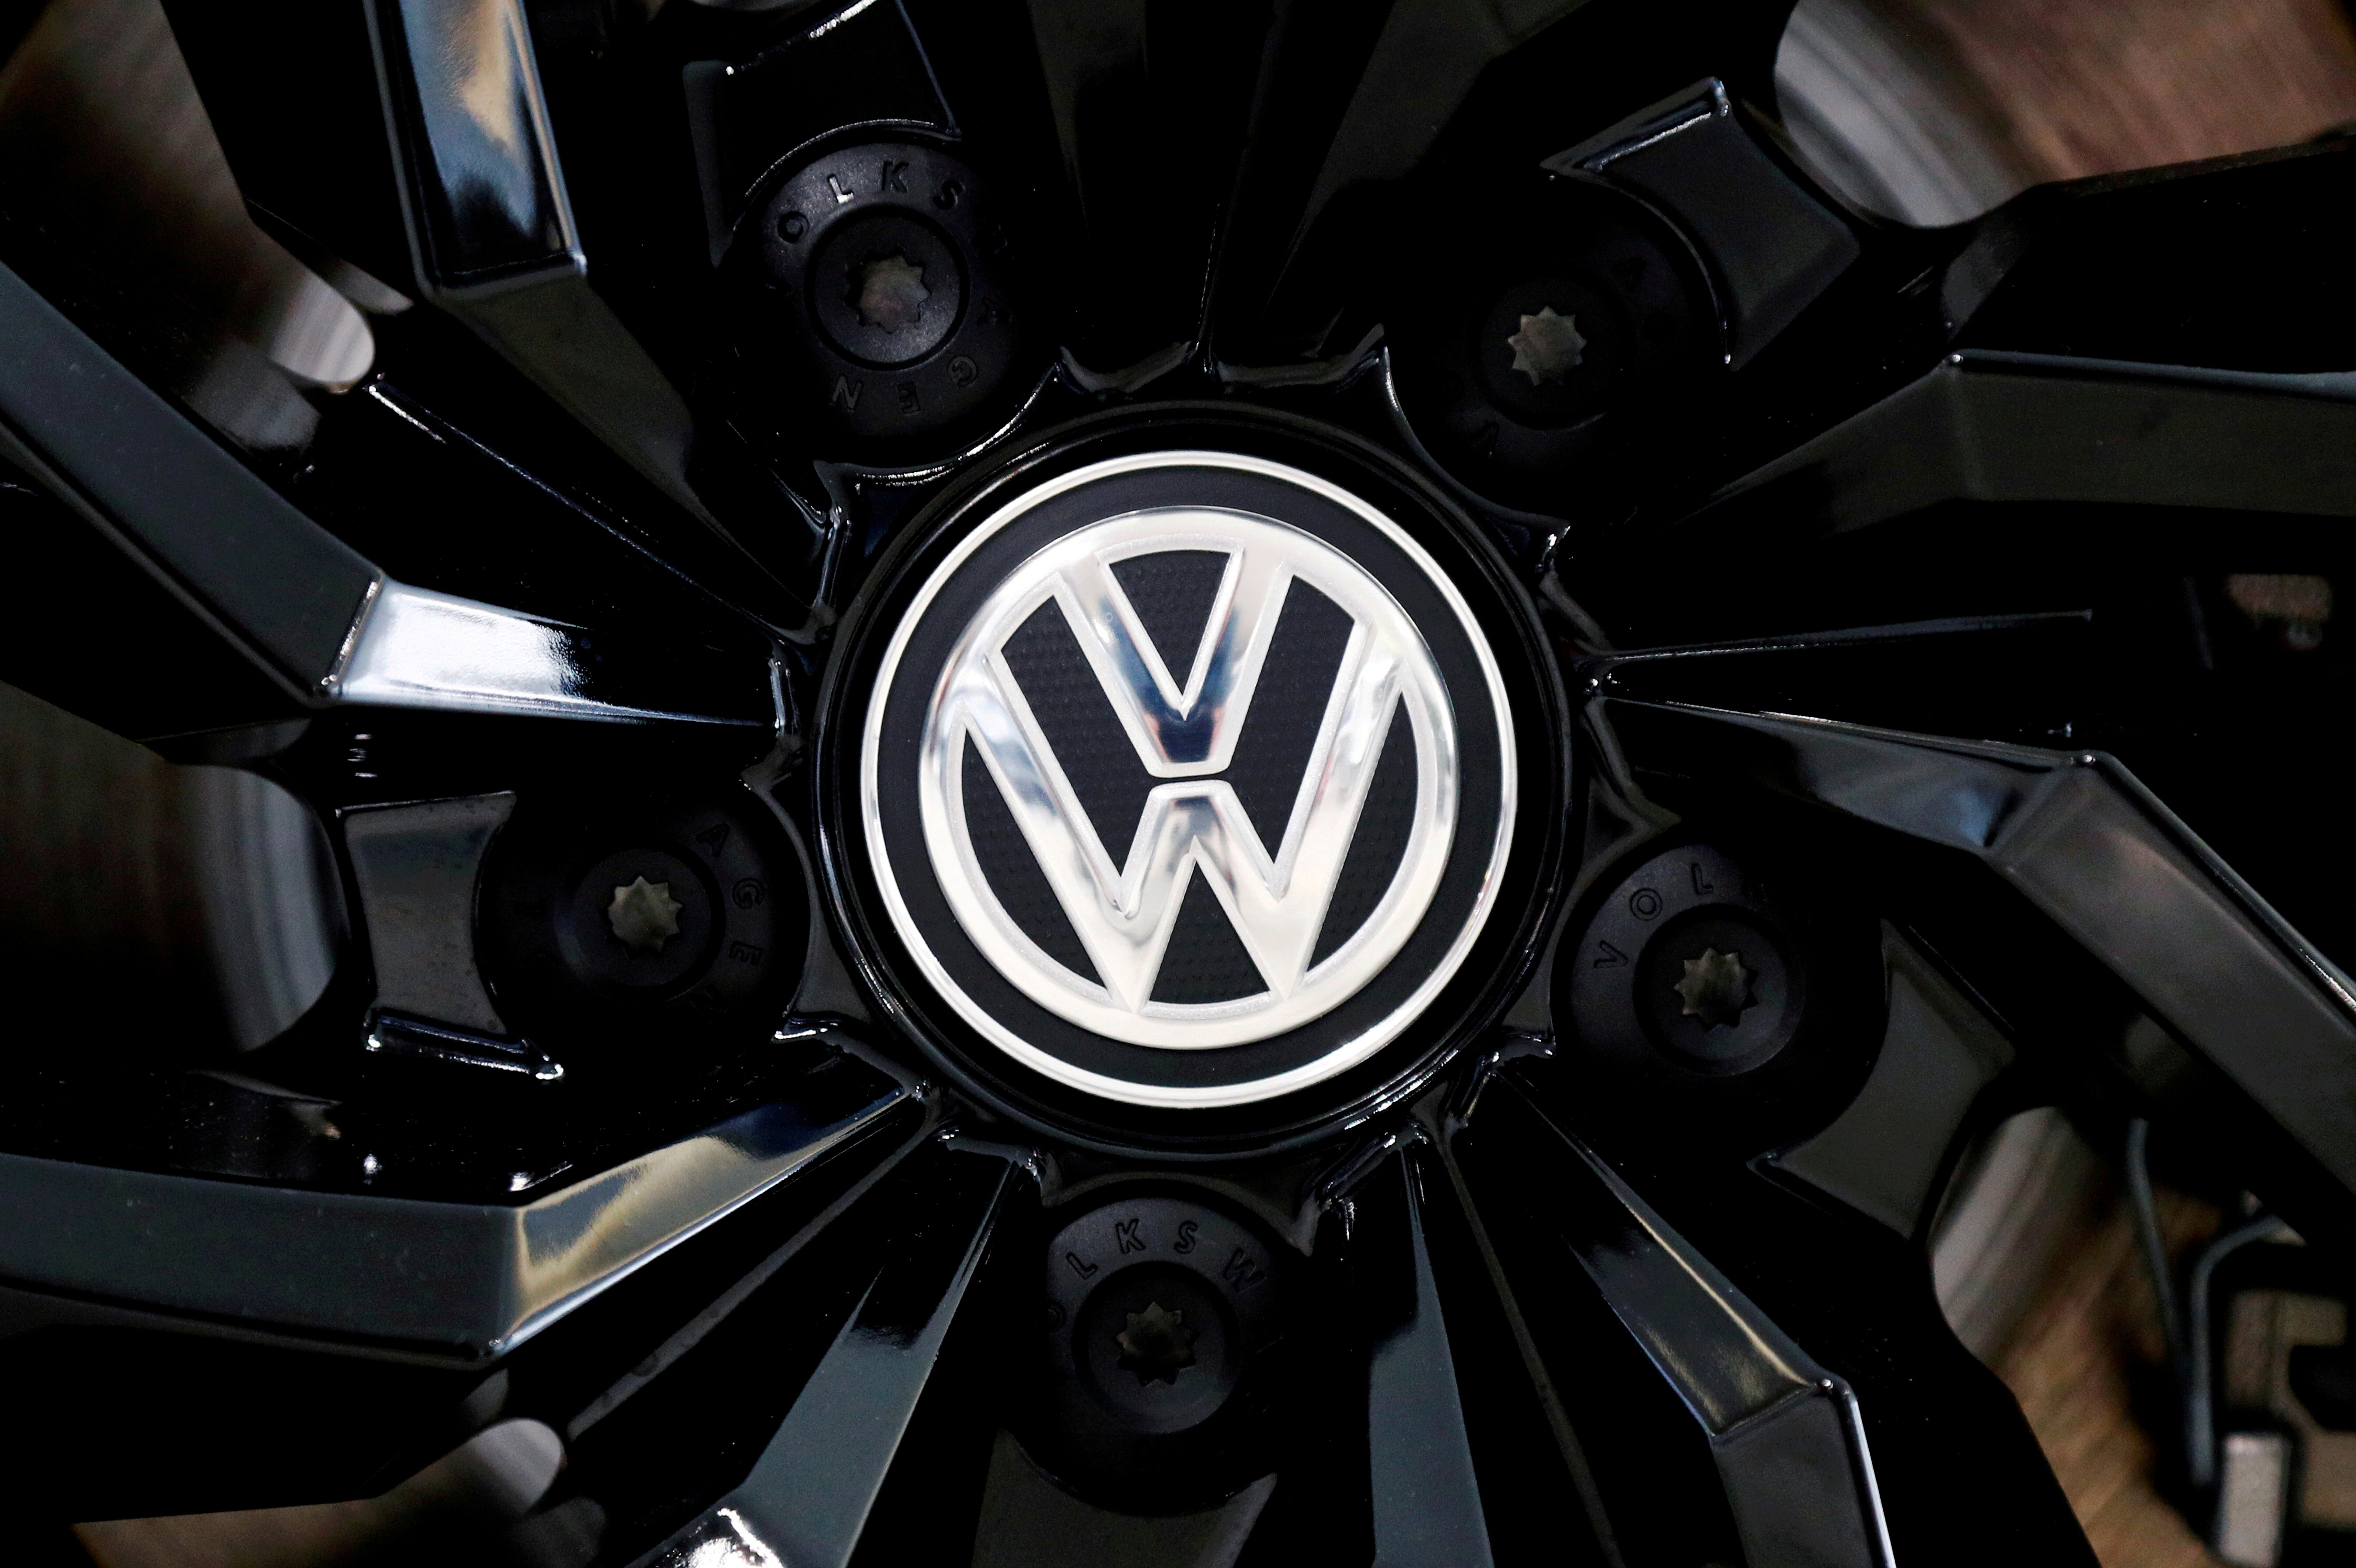 The logo of German carmaker Volkswagen is seen on a rim cap in a showroom of a Volkswagen car dealer in Brussels, Belgium July 9, 2020. REUTERS/Francois Lenoir